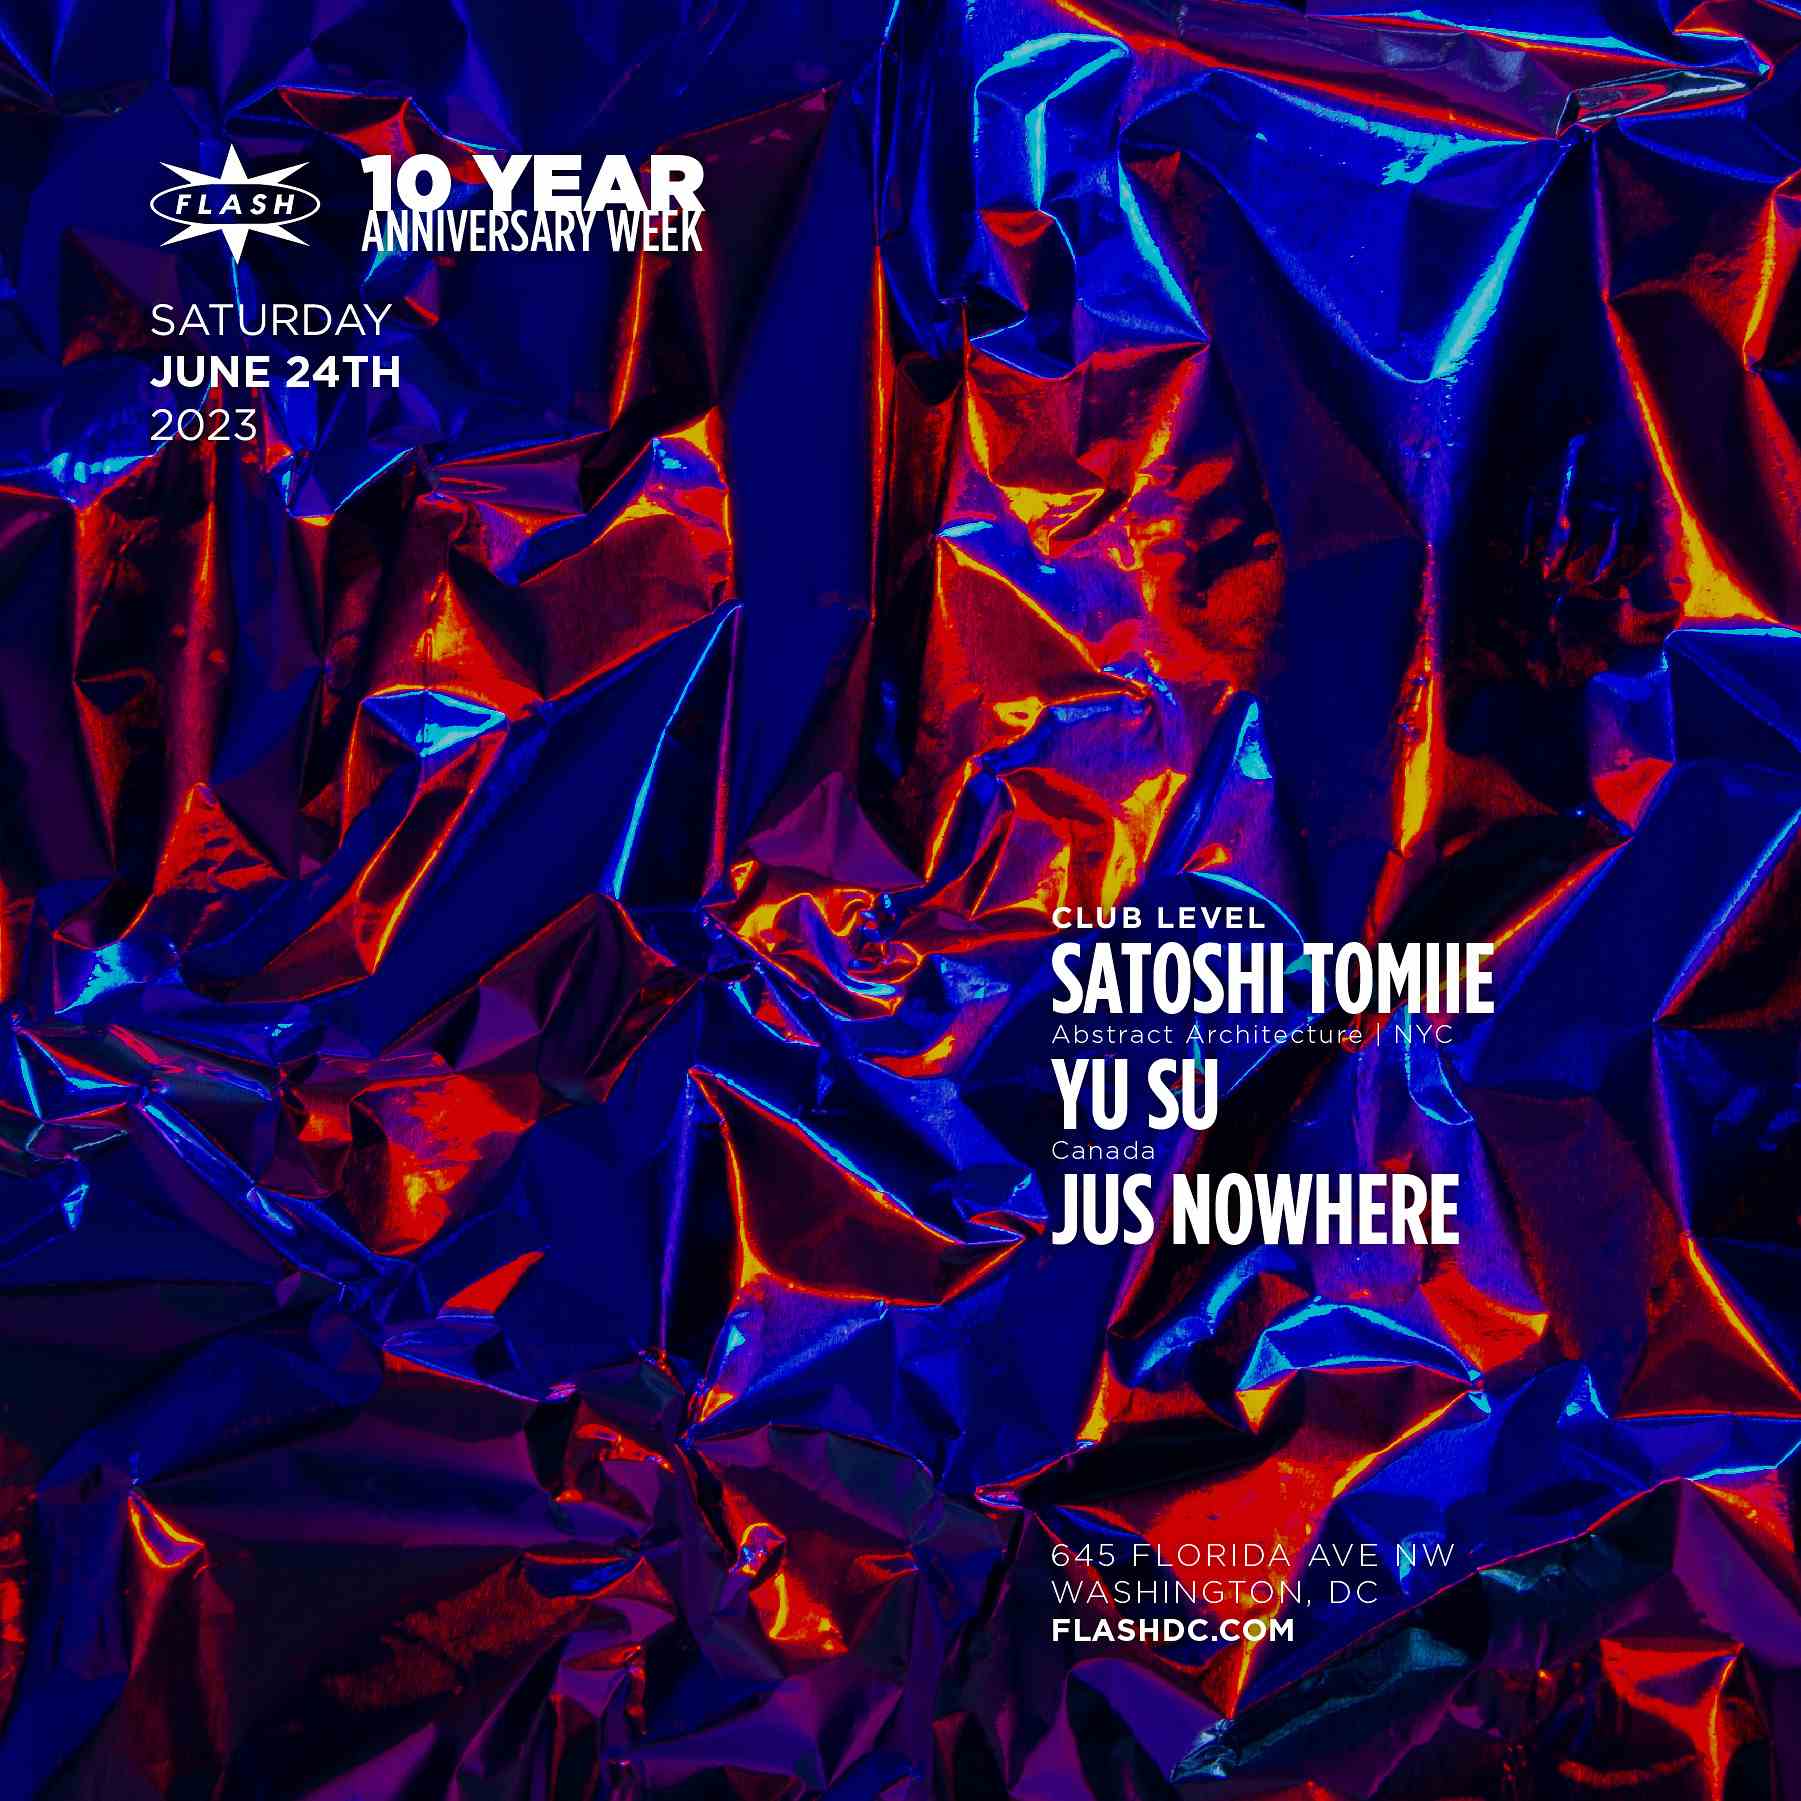 Satoshi Tomiie - Yu Su event flyer